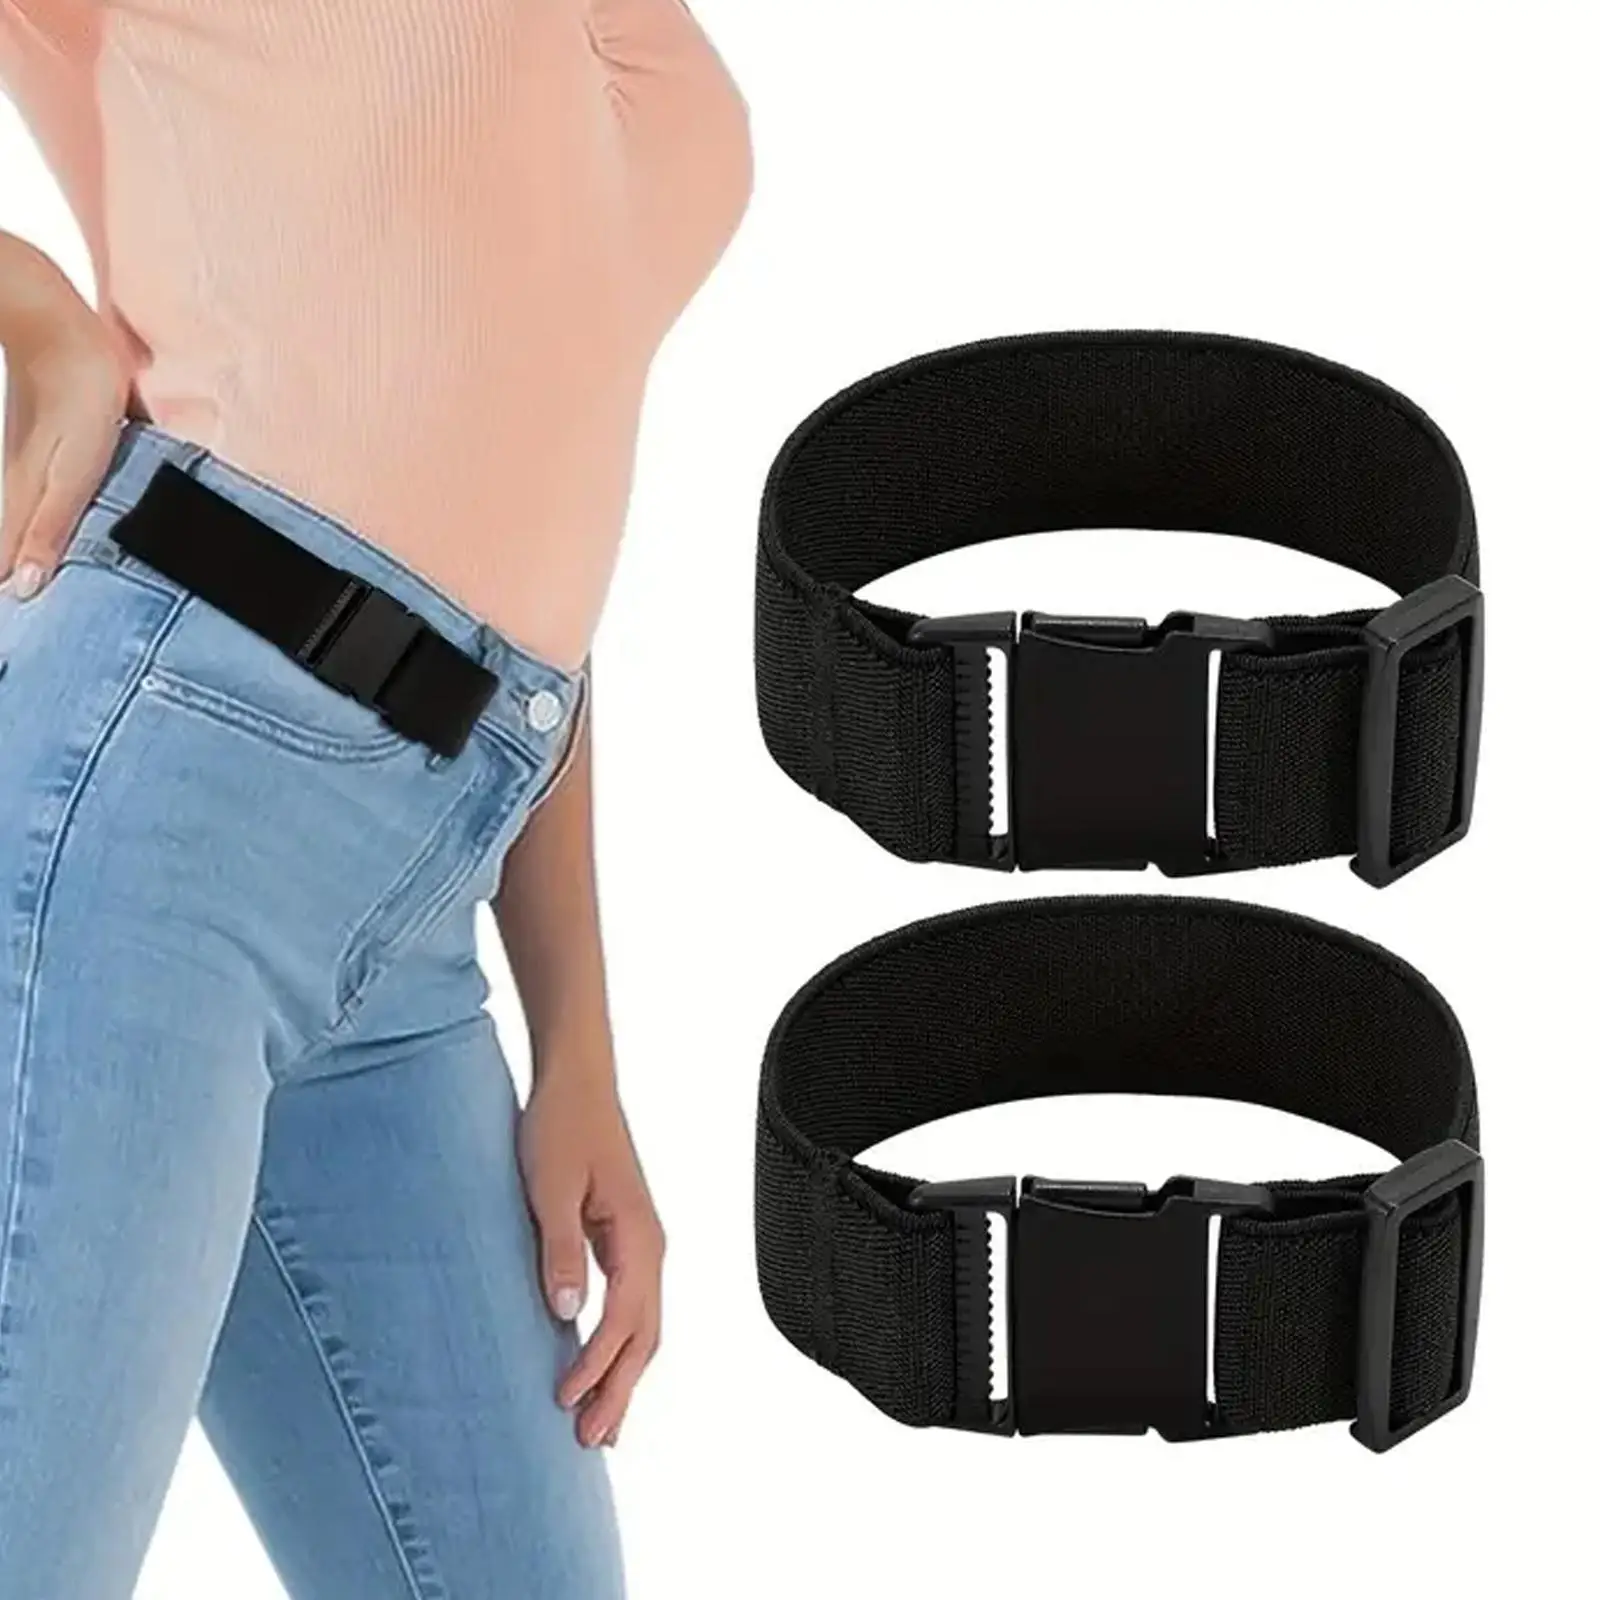 2Pcs No Buckle Belt Waist Belt Clothing Accessory Lightweight Waistband Invisible for Adult and Kids Everyday Wear Men Women